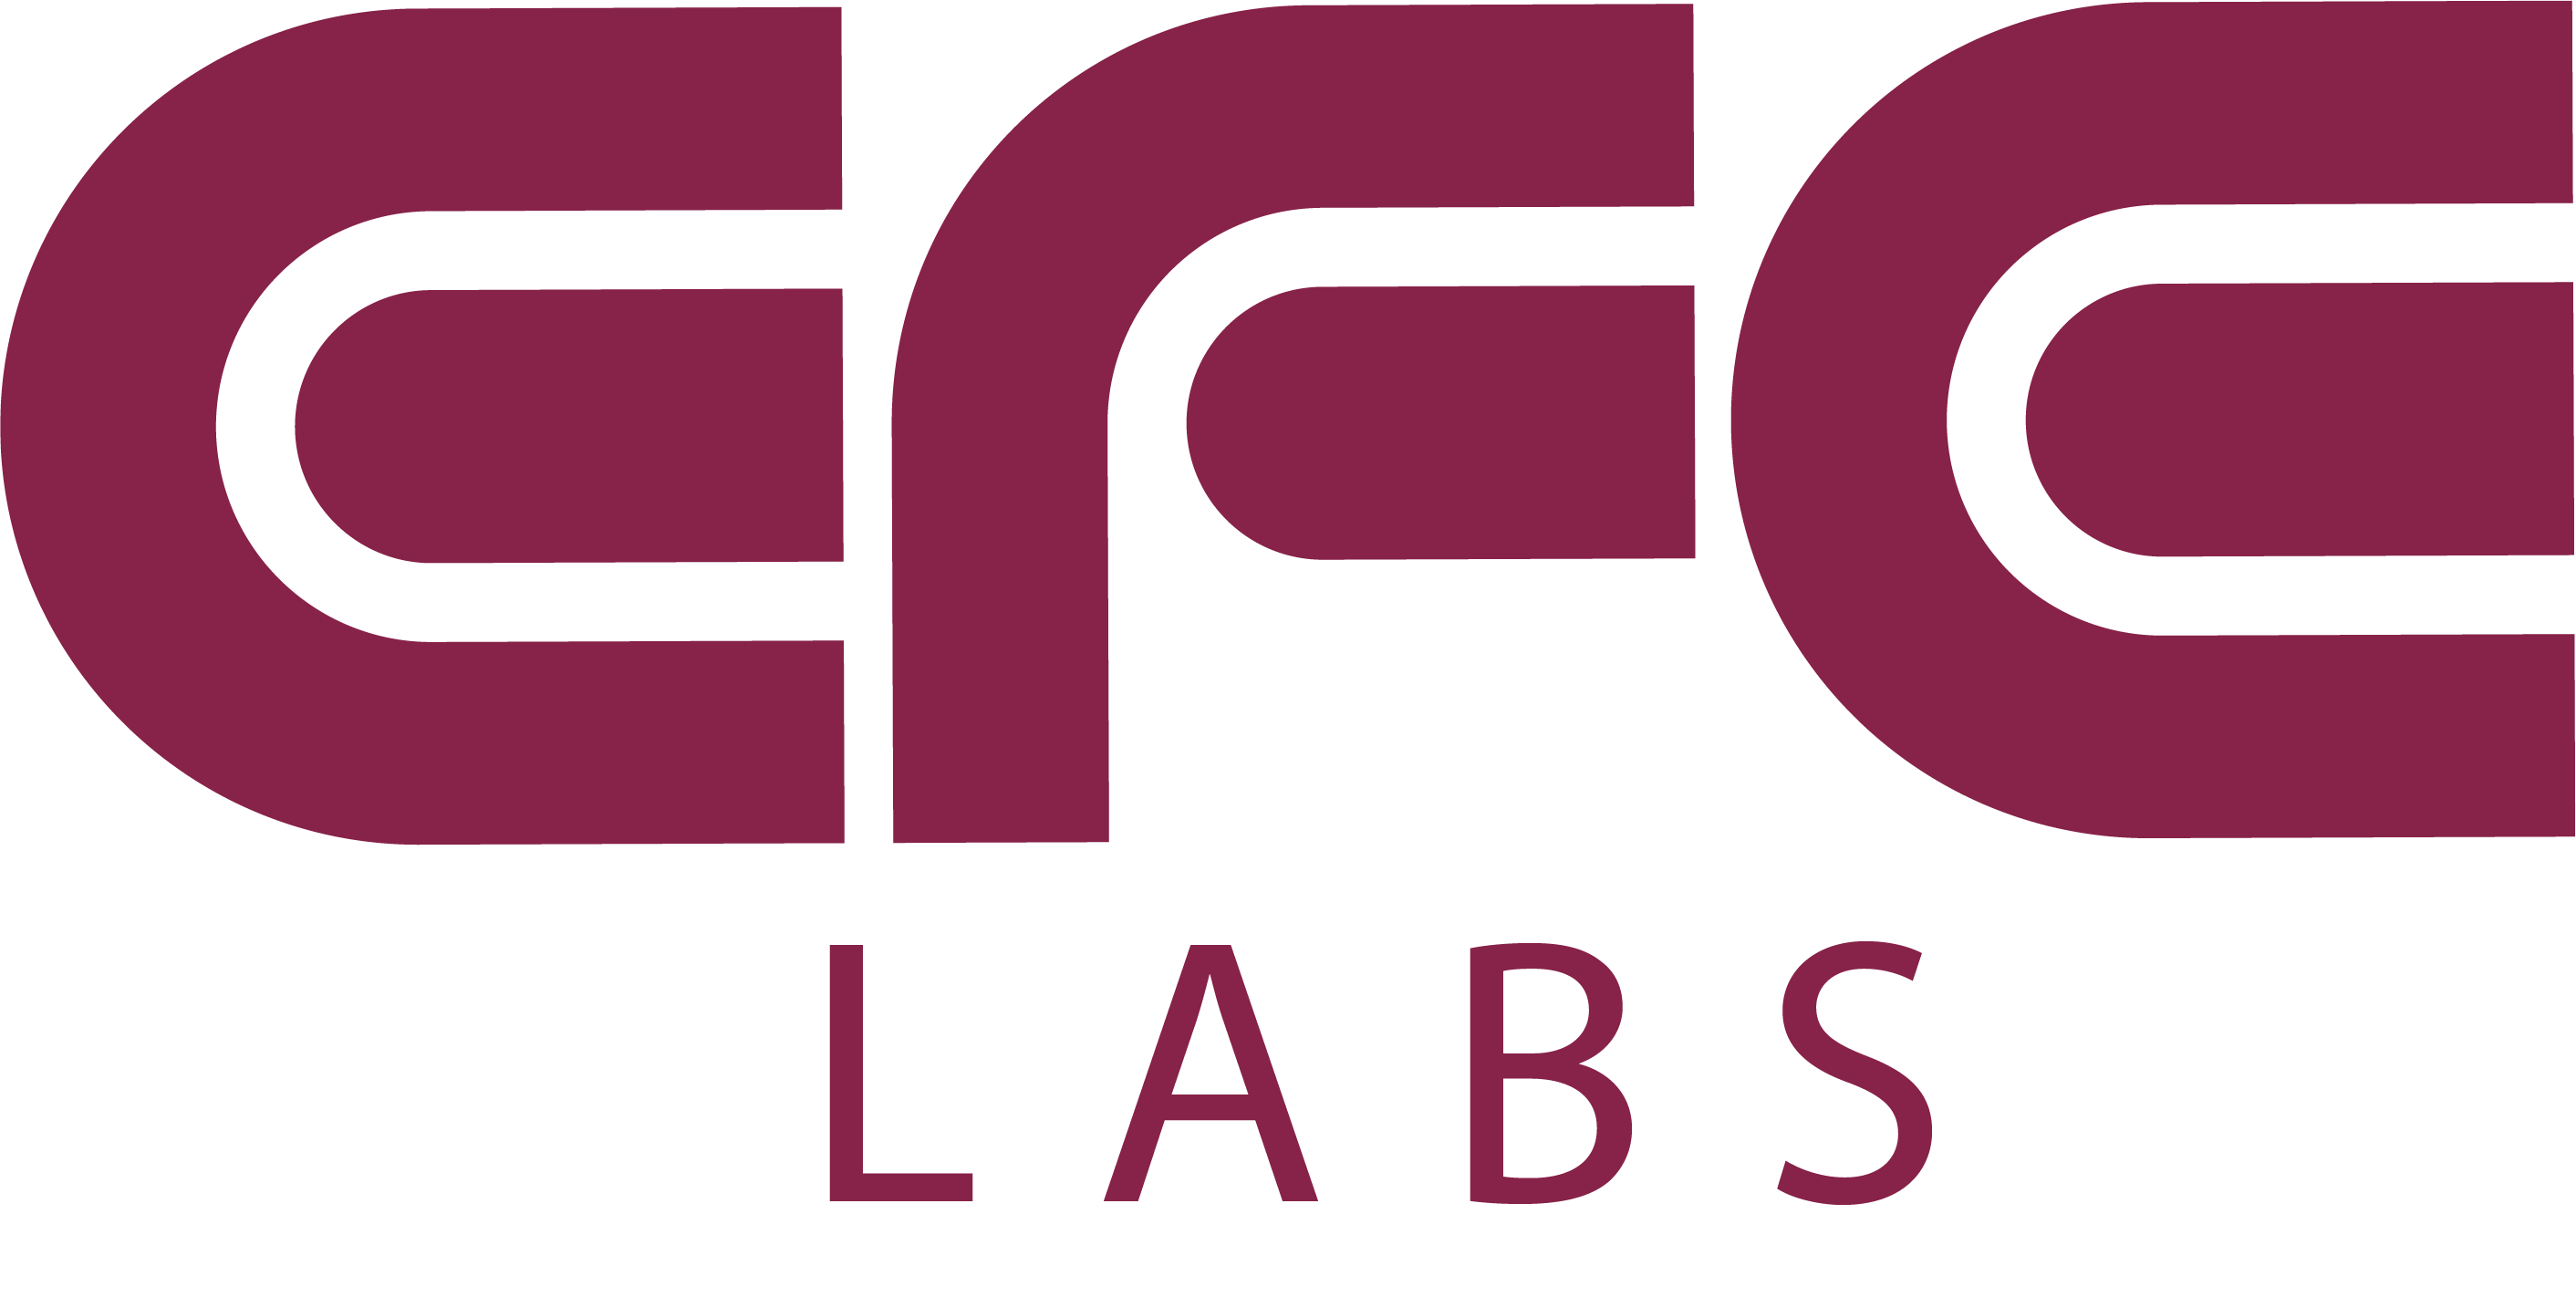 EFE Laboratories logo